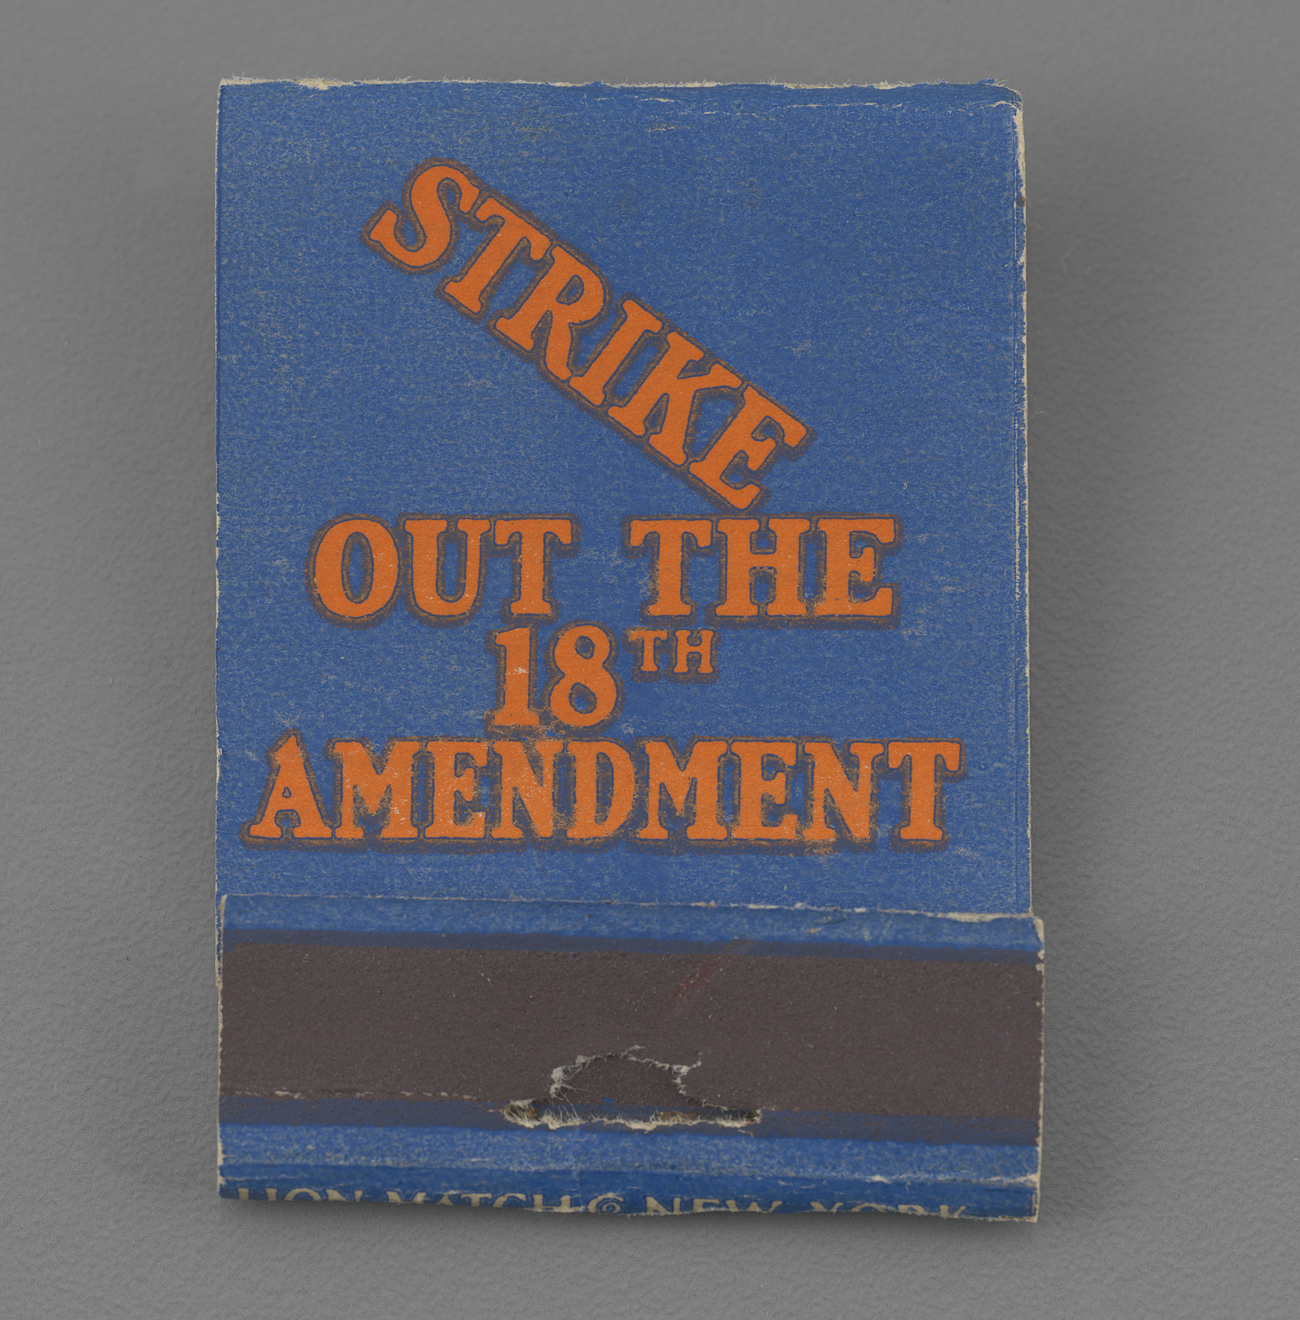 “Strike out the 18th Amendment” Matchbook